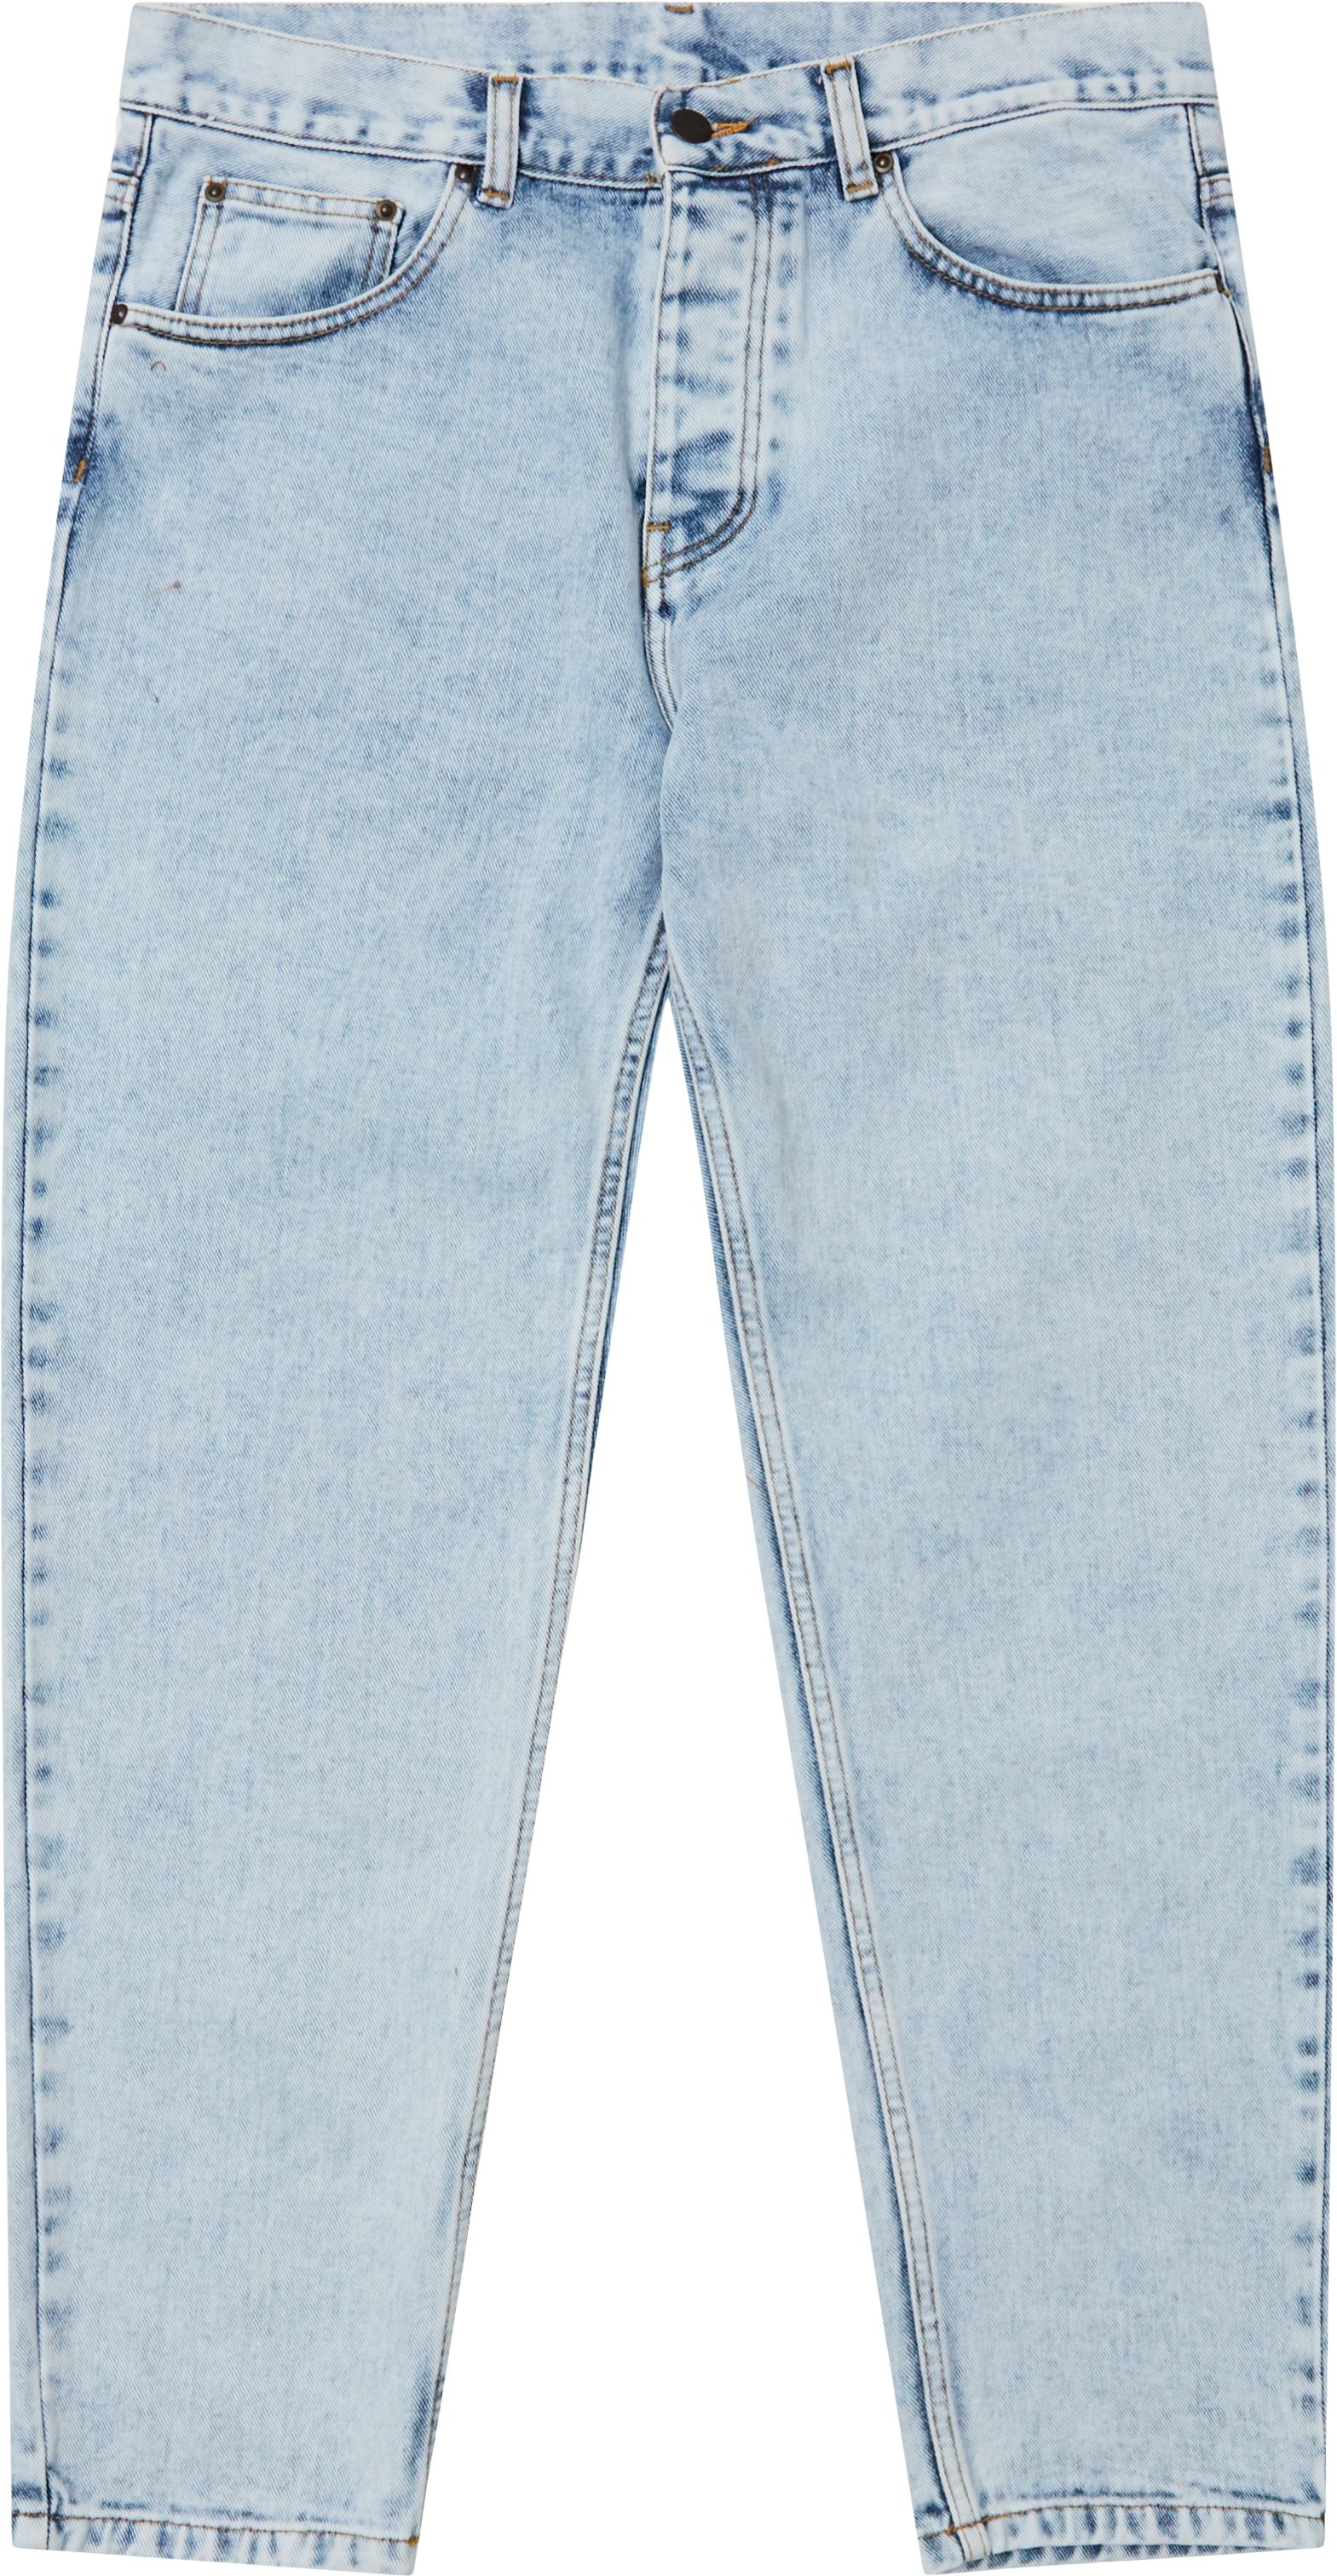 Newel Pant I029208 - Jeans - Tapered fit - Denim